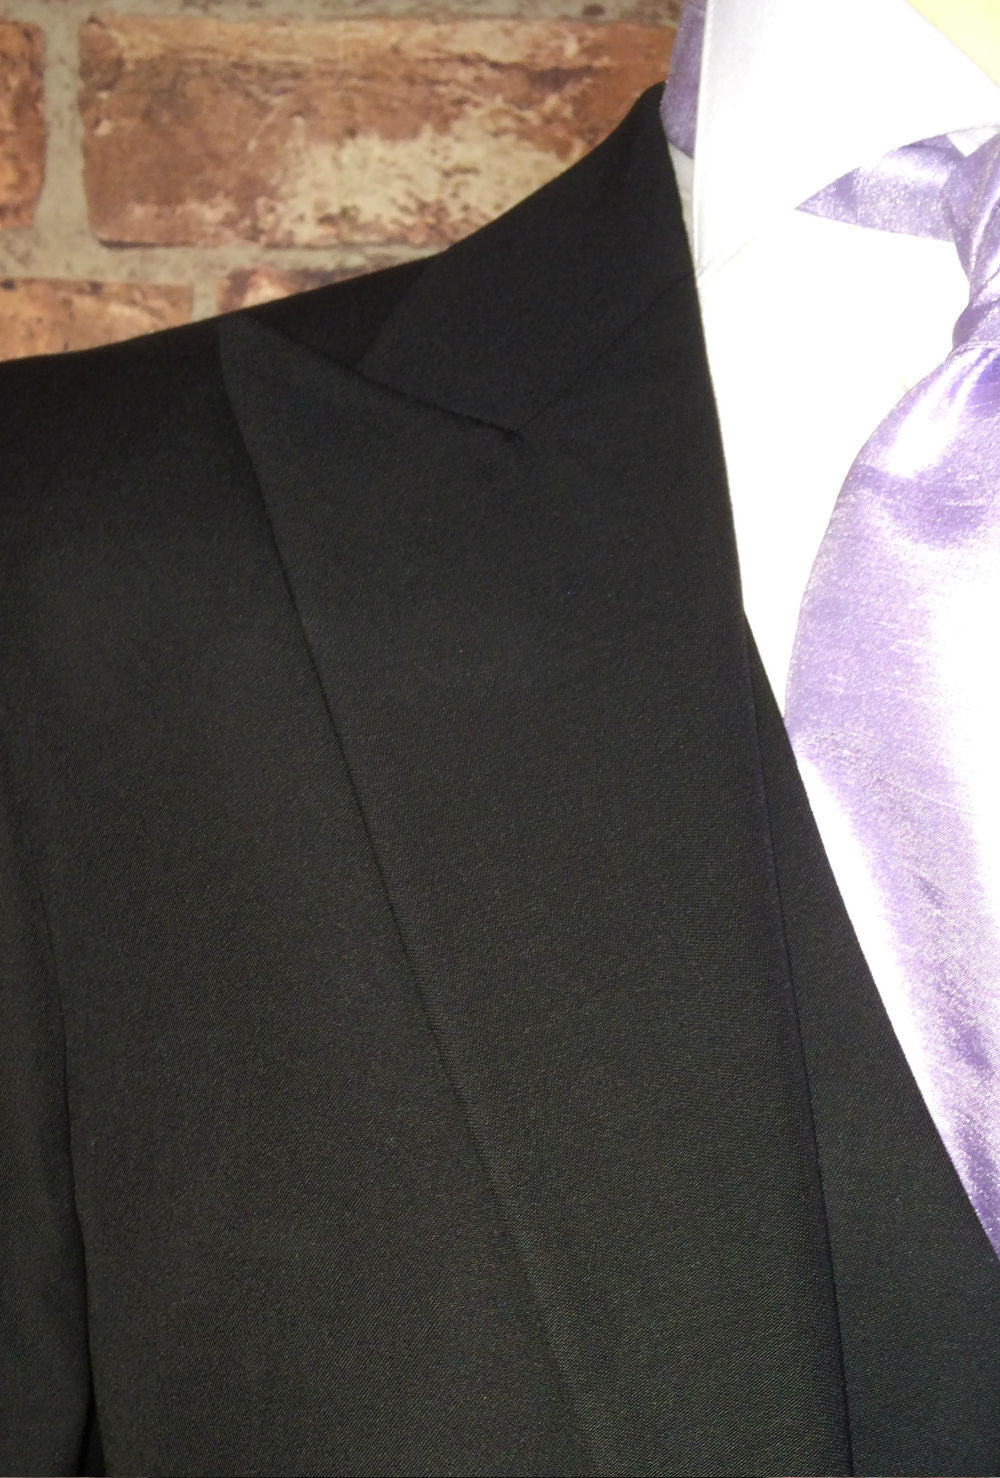 Black Prestige 3 piece Wedding suit (light weight and slim fit)